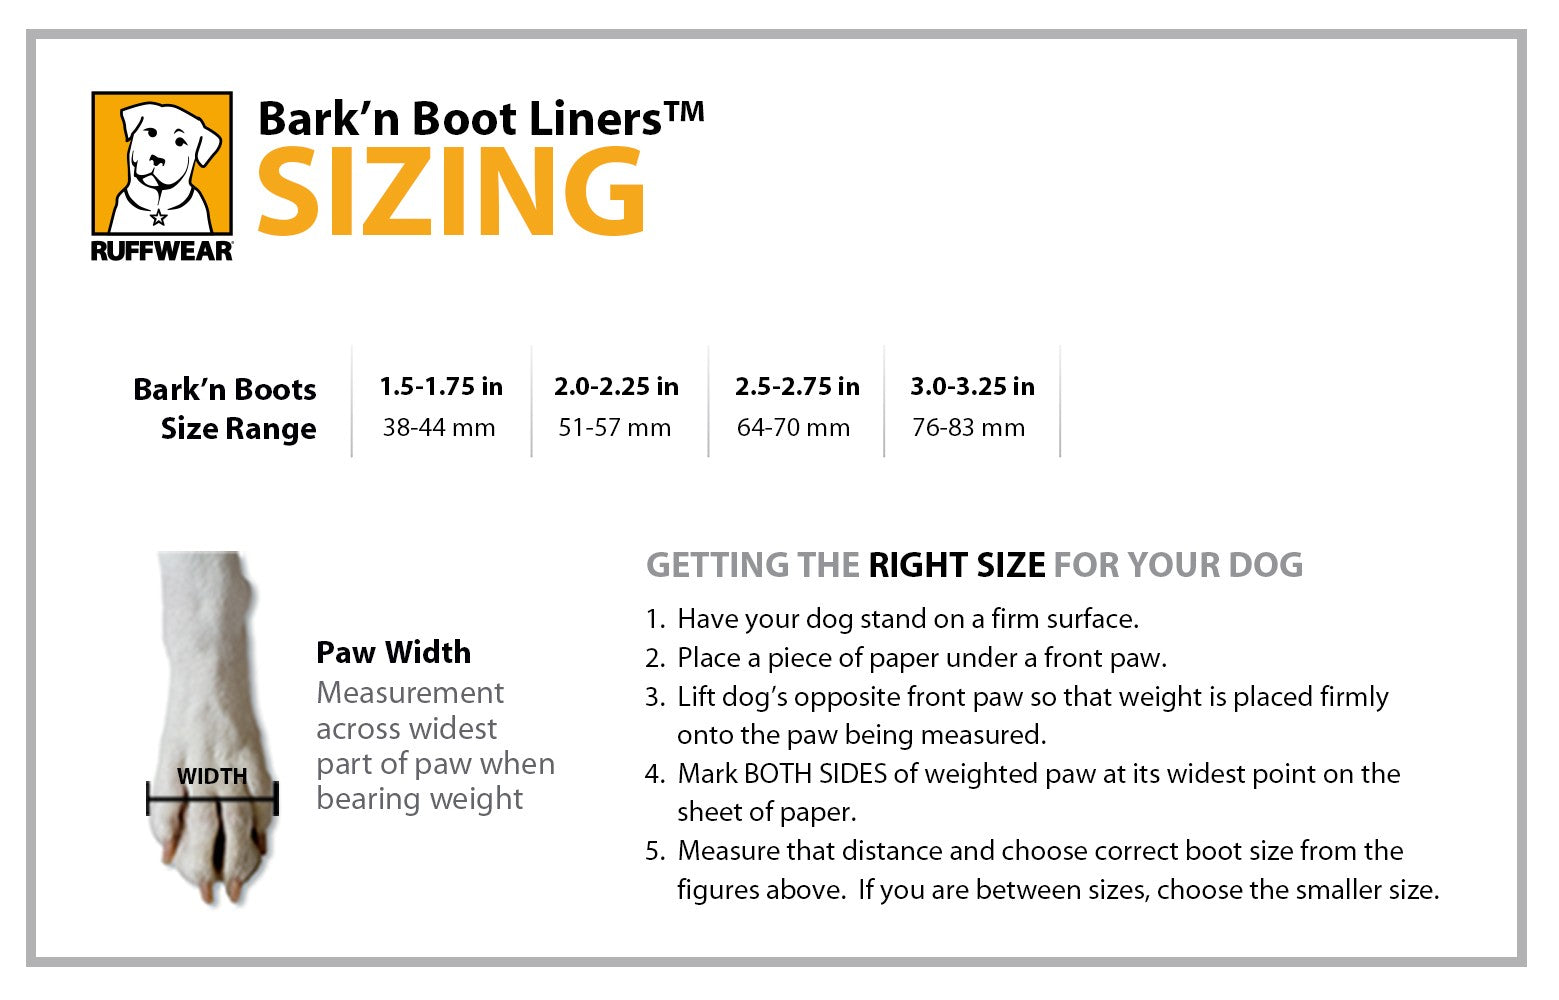 Ruffwear Bark'n Boots Liners - Sizing Guide